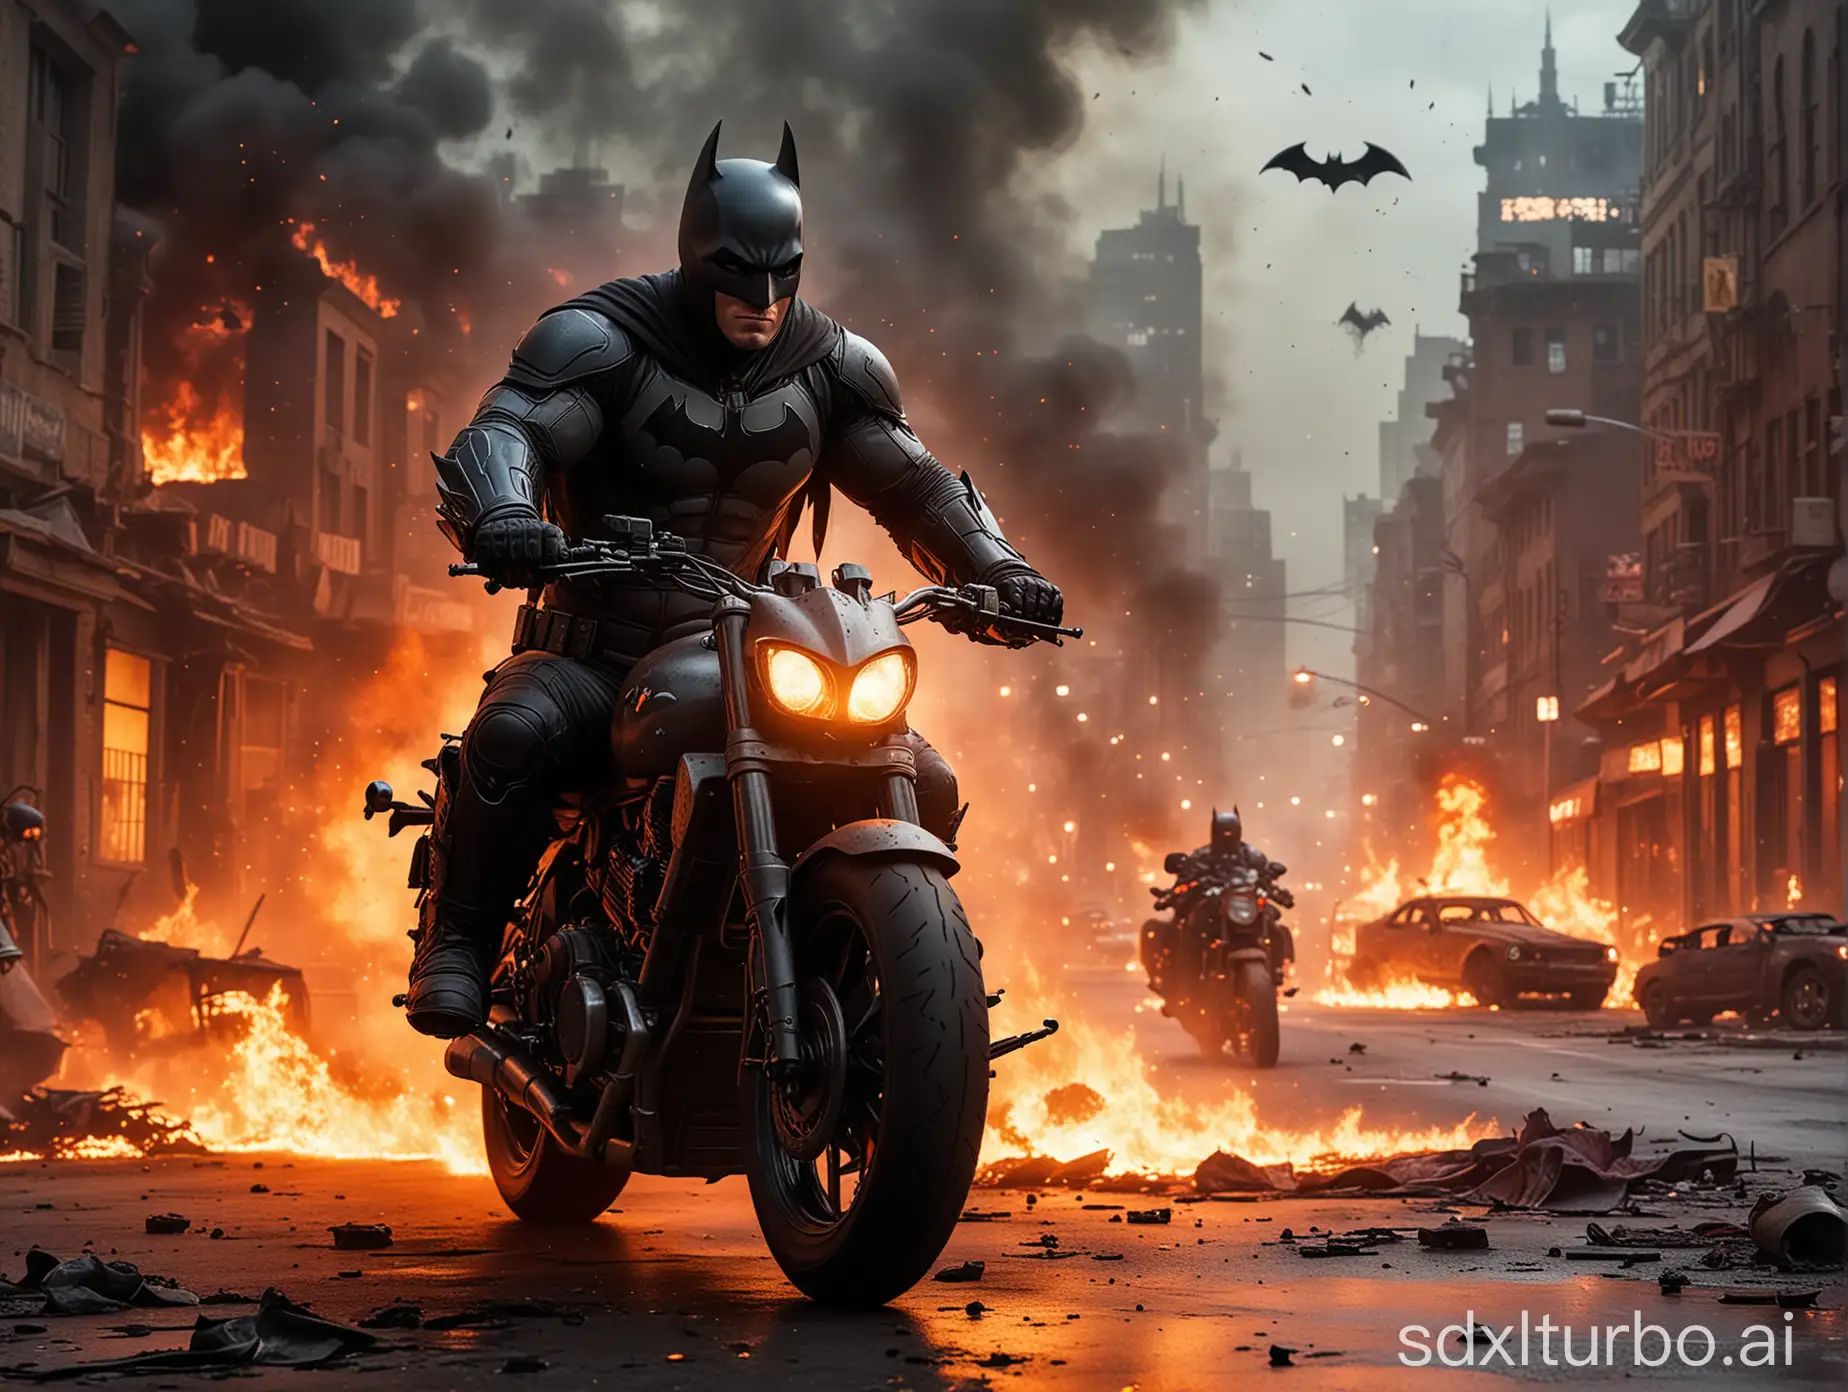 Batman-Riding-Red-Motorcycle-Through-Burning-City